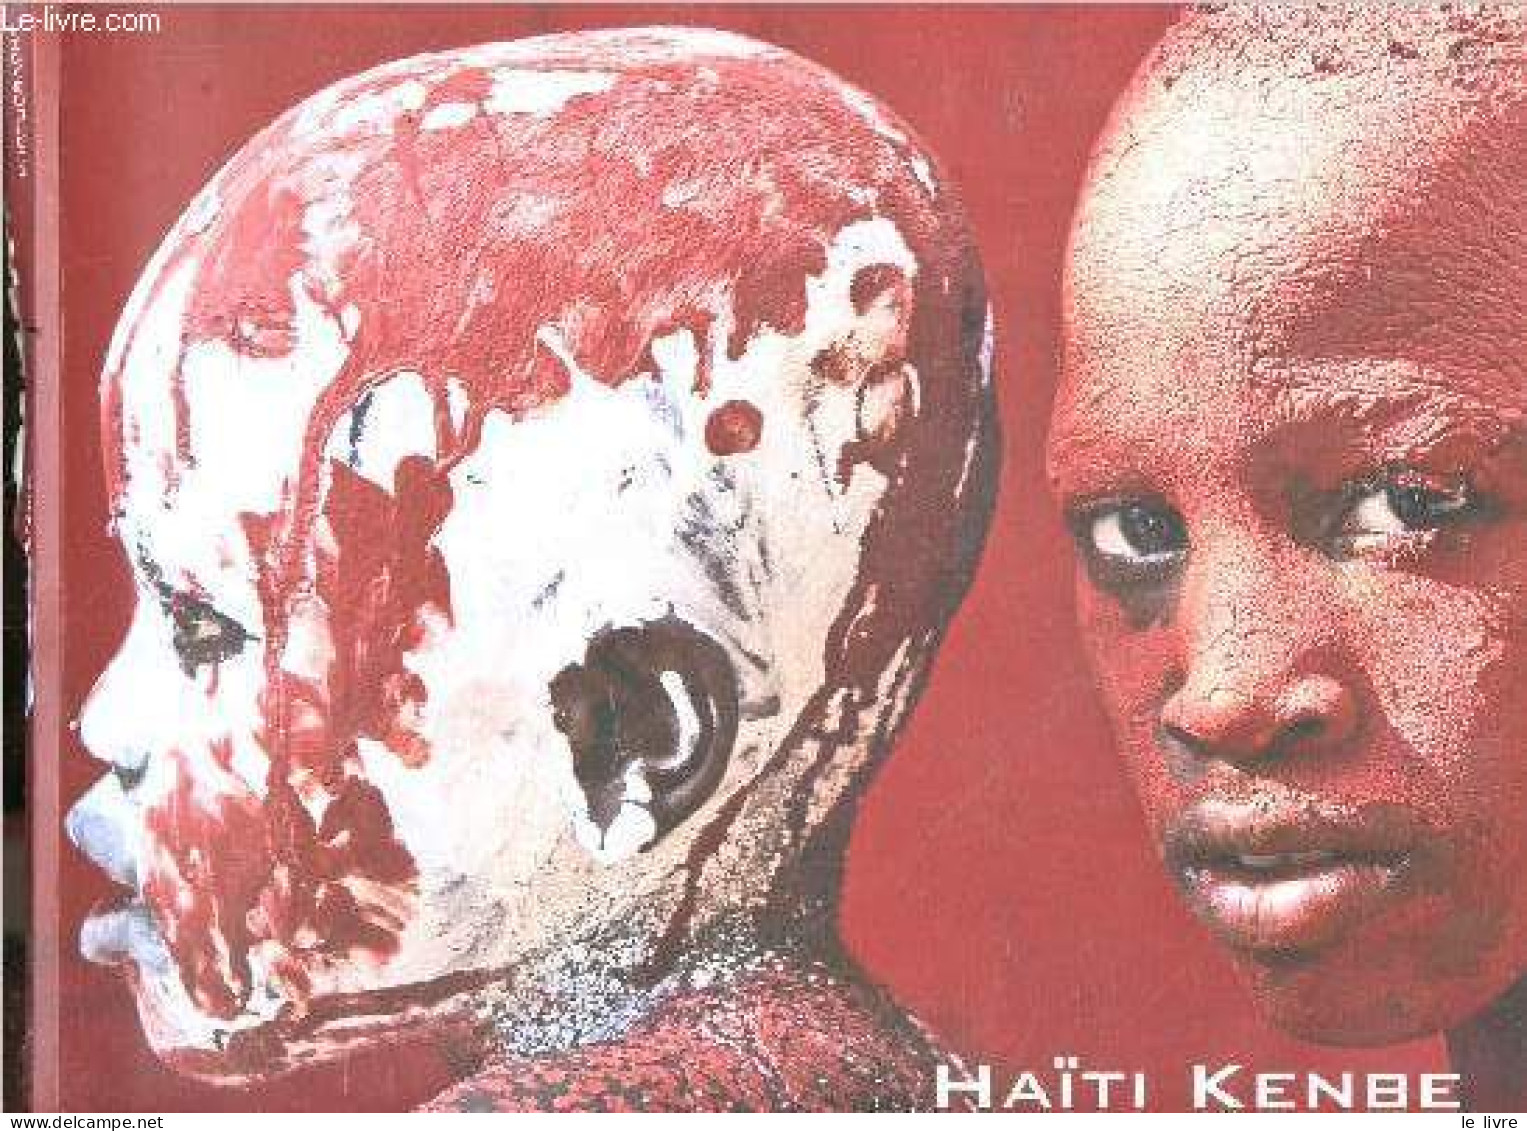 Haiti Kenbe - Ayiti, Kenbe Pa Lage ! - Benjamin - Jacques Martin Philippson - 2010 - Photographie